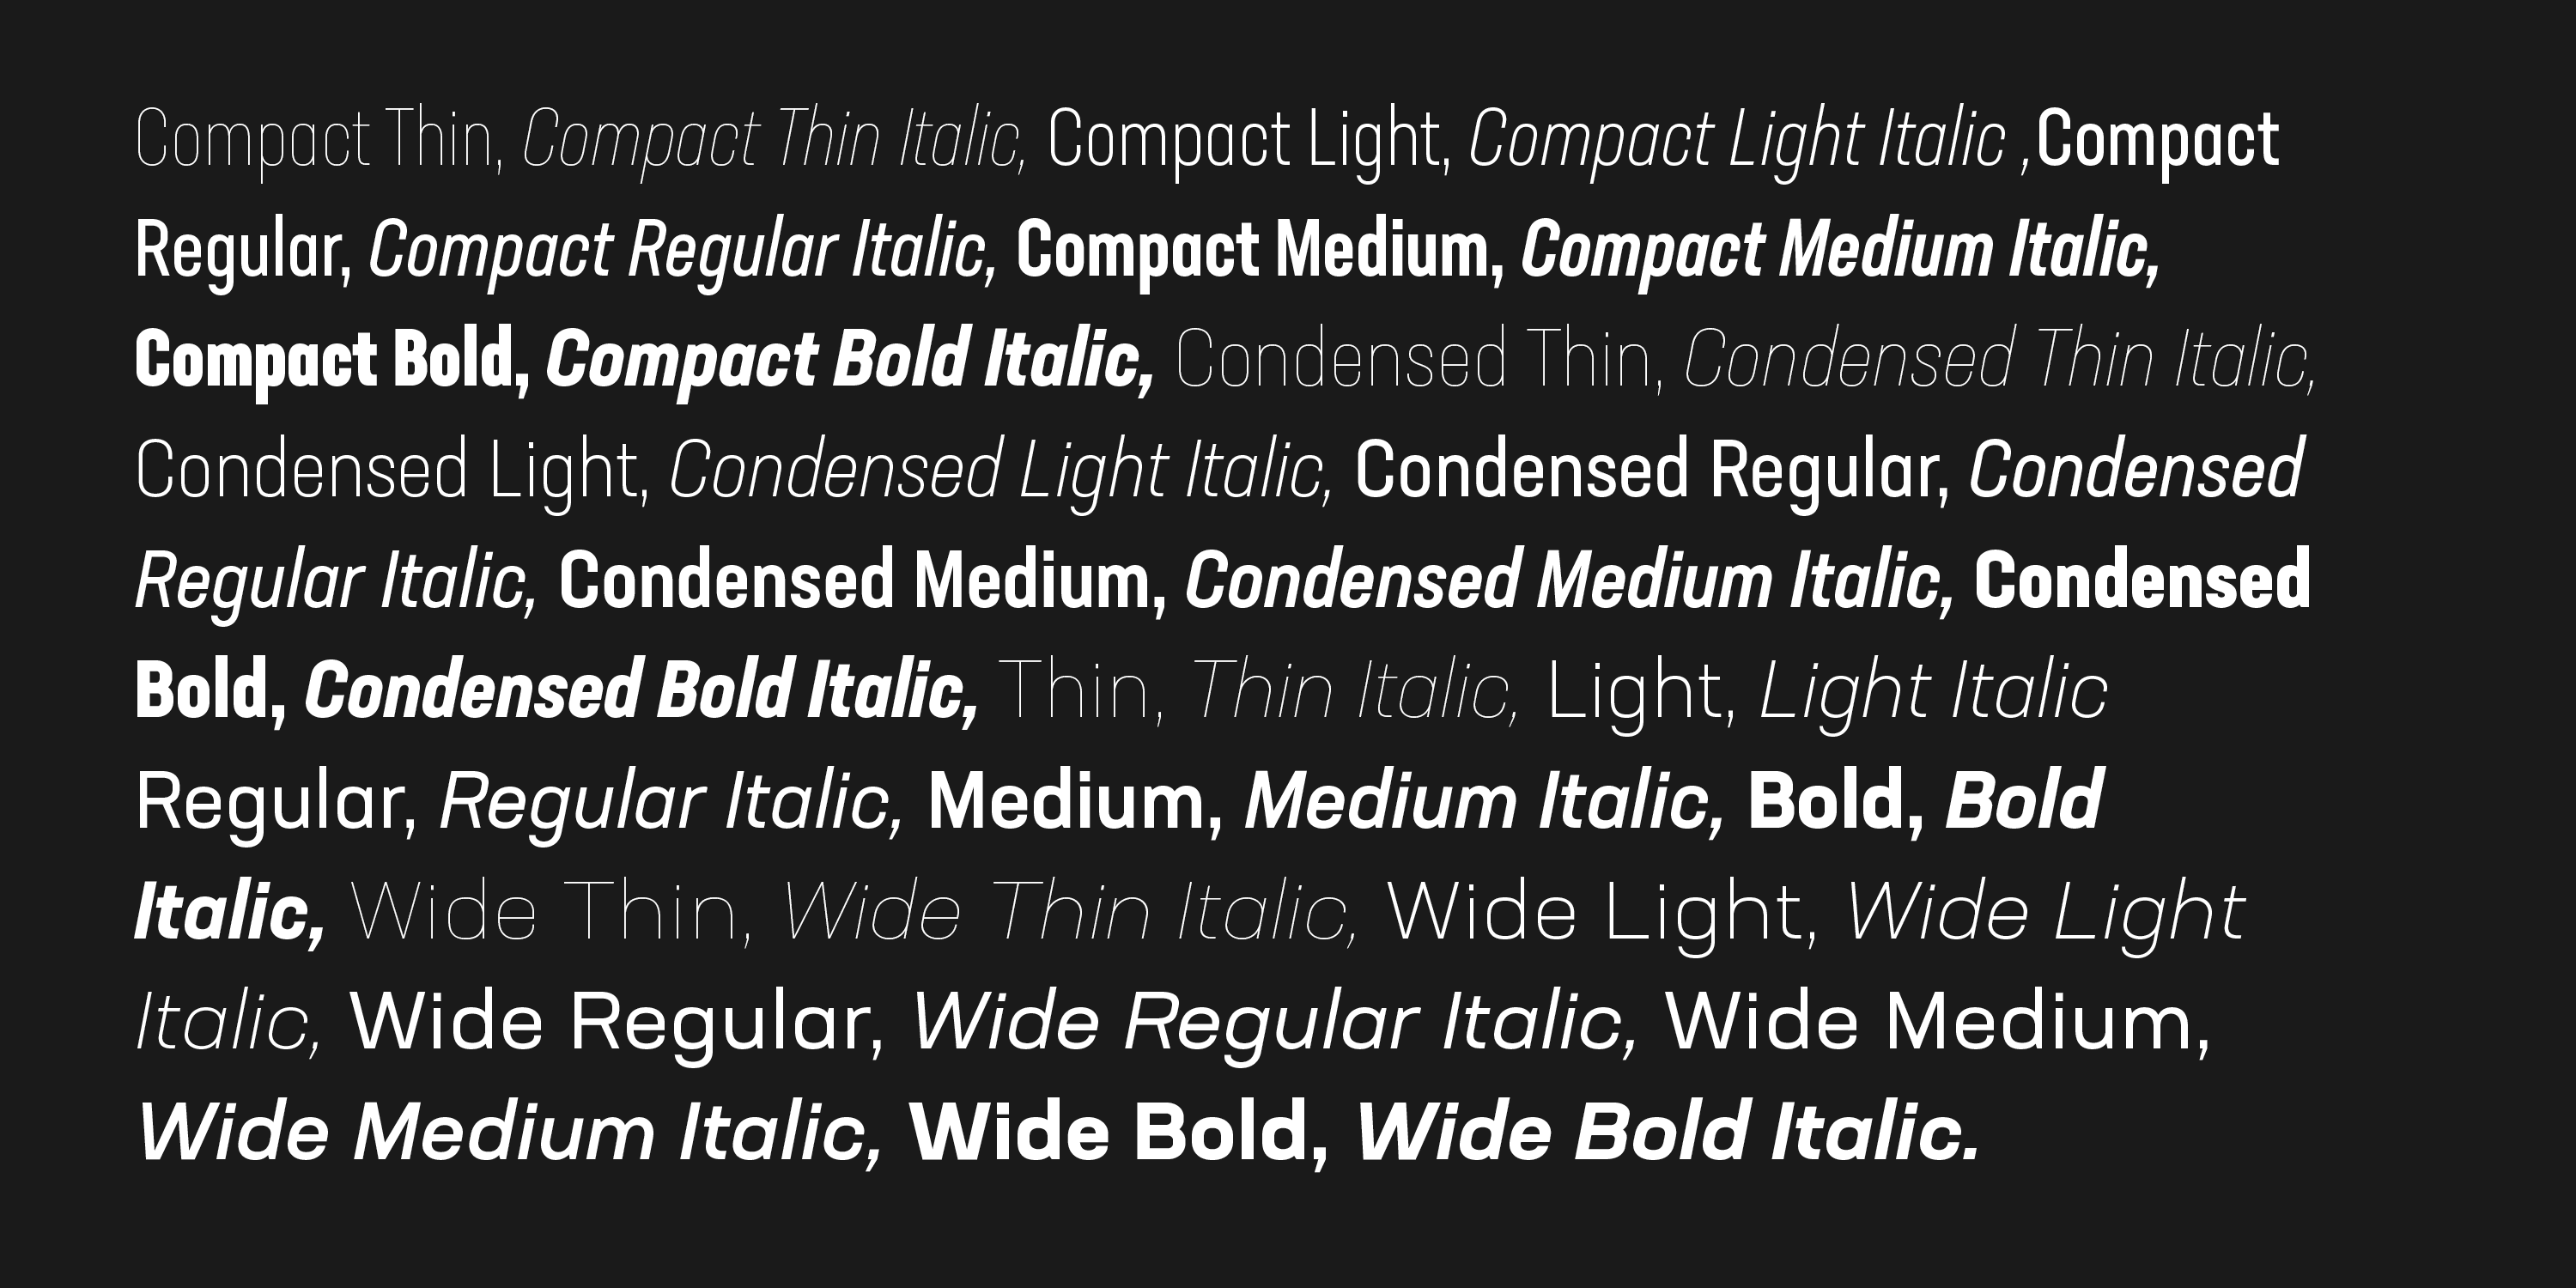 Przykład czcionki Neusa Next Pro Condensed Italic